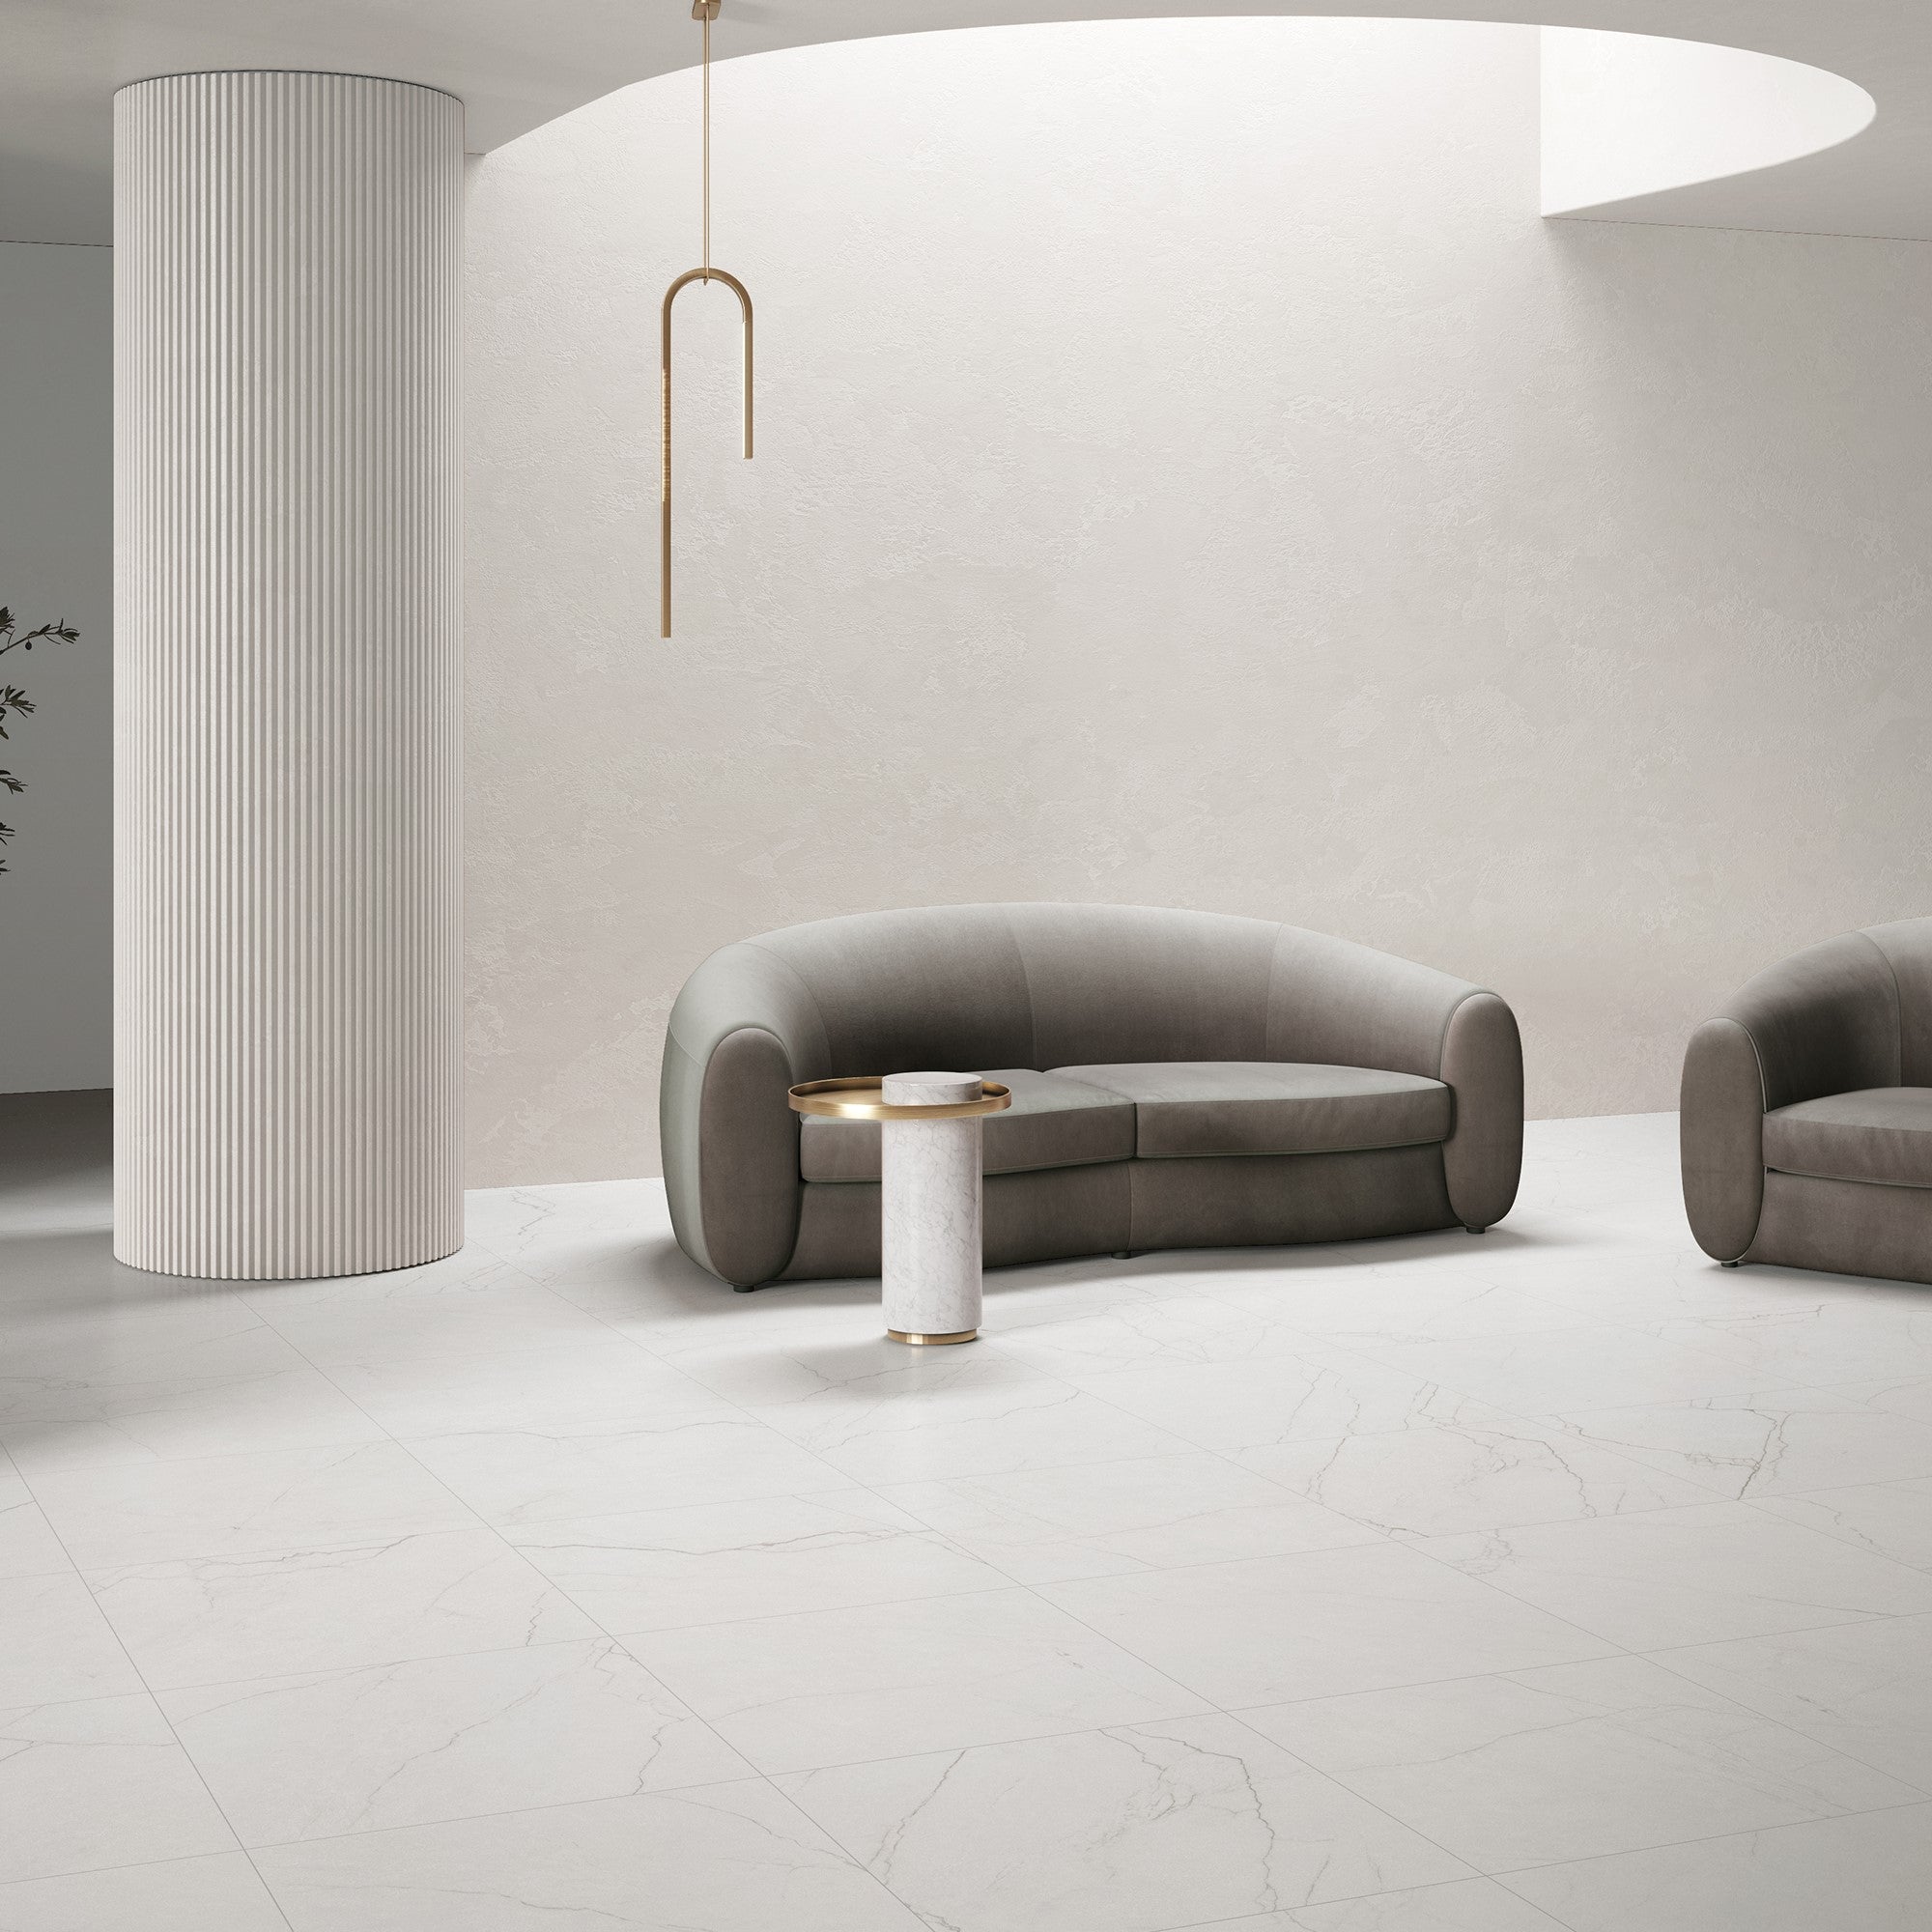 Class Salon Bianco / Class Living room Bianco